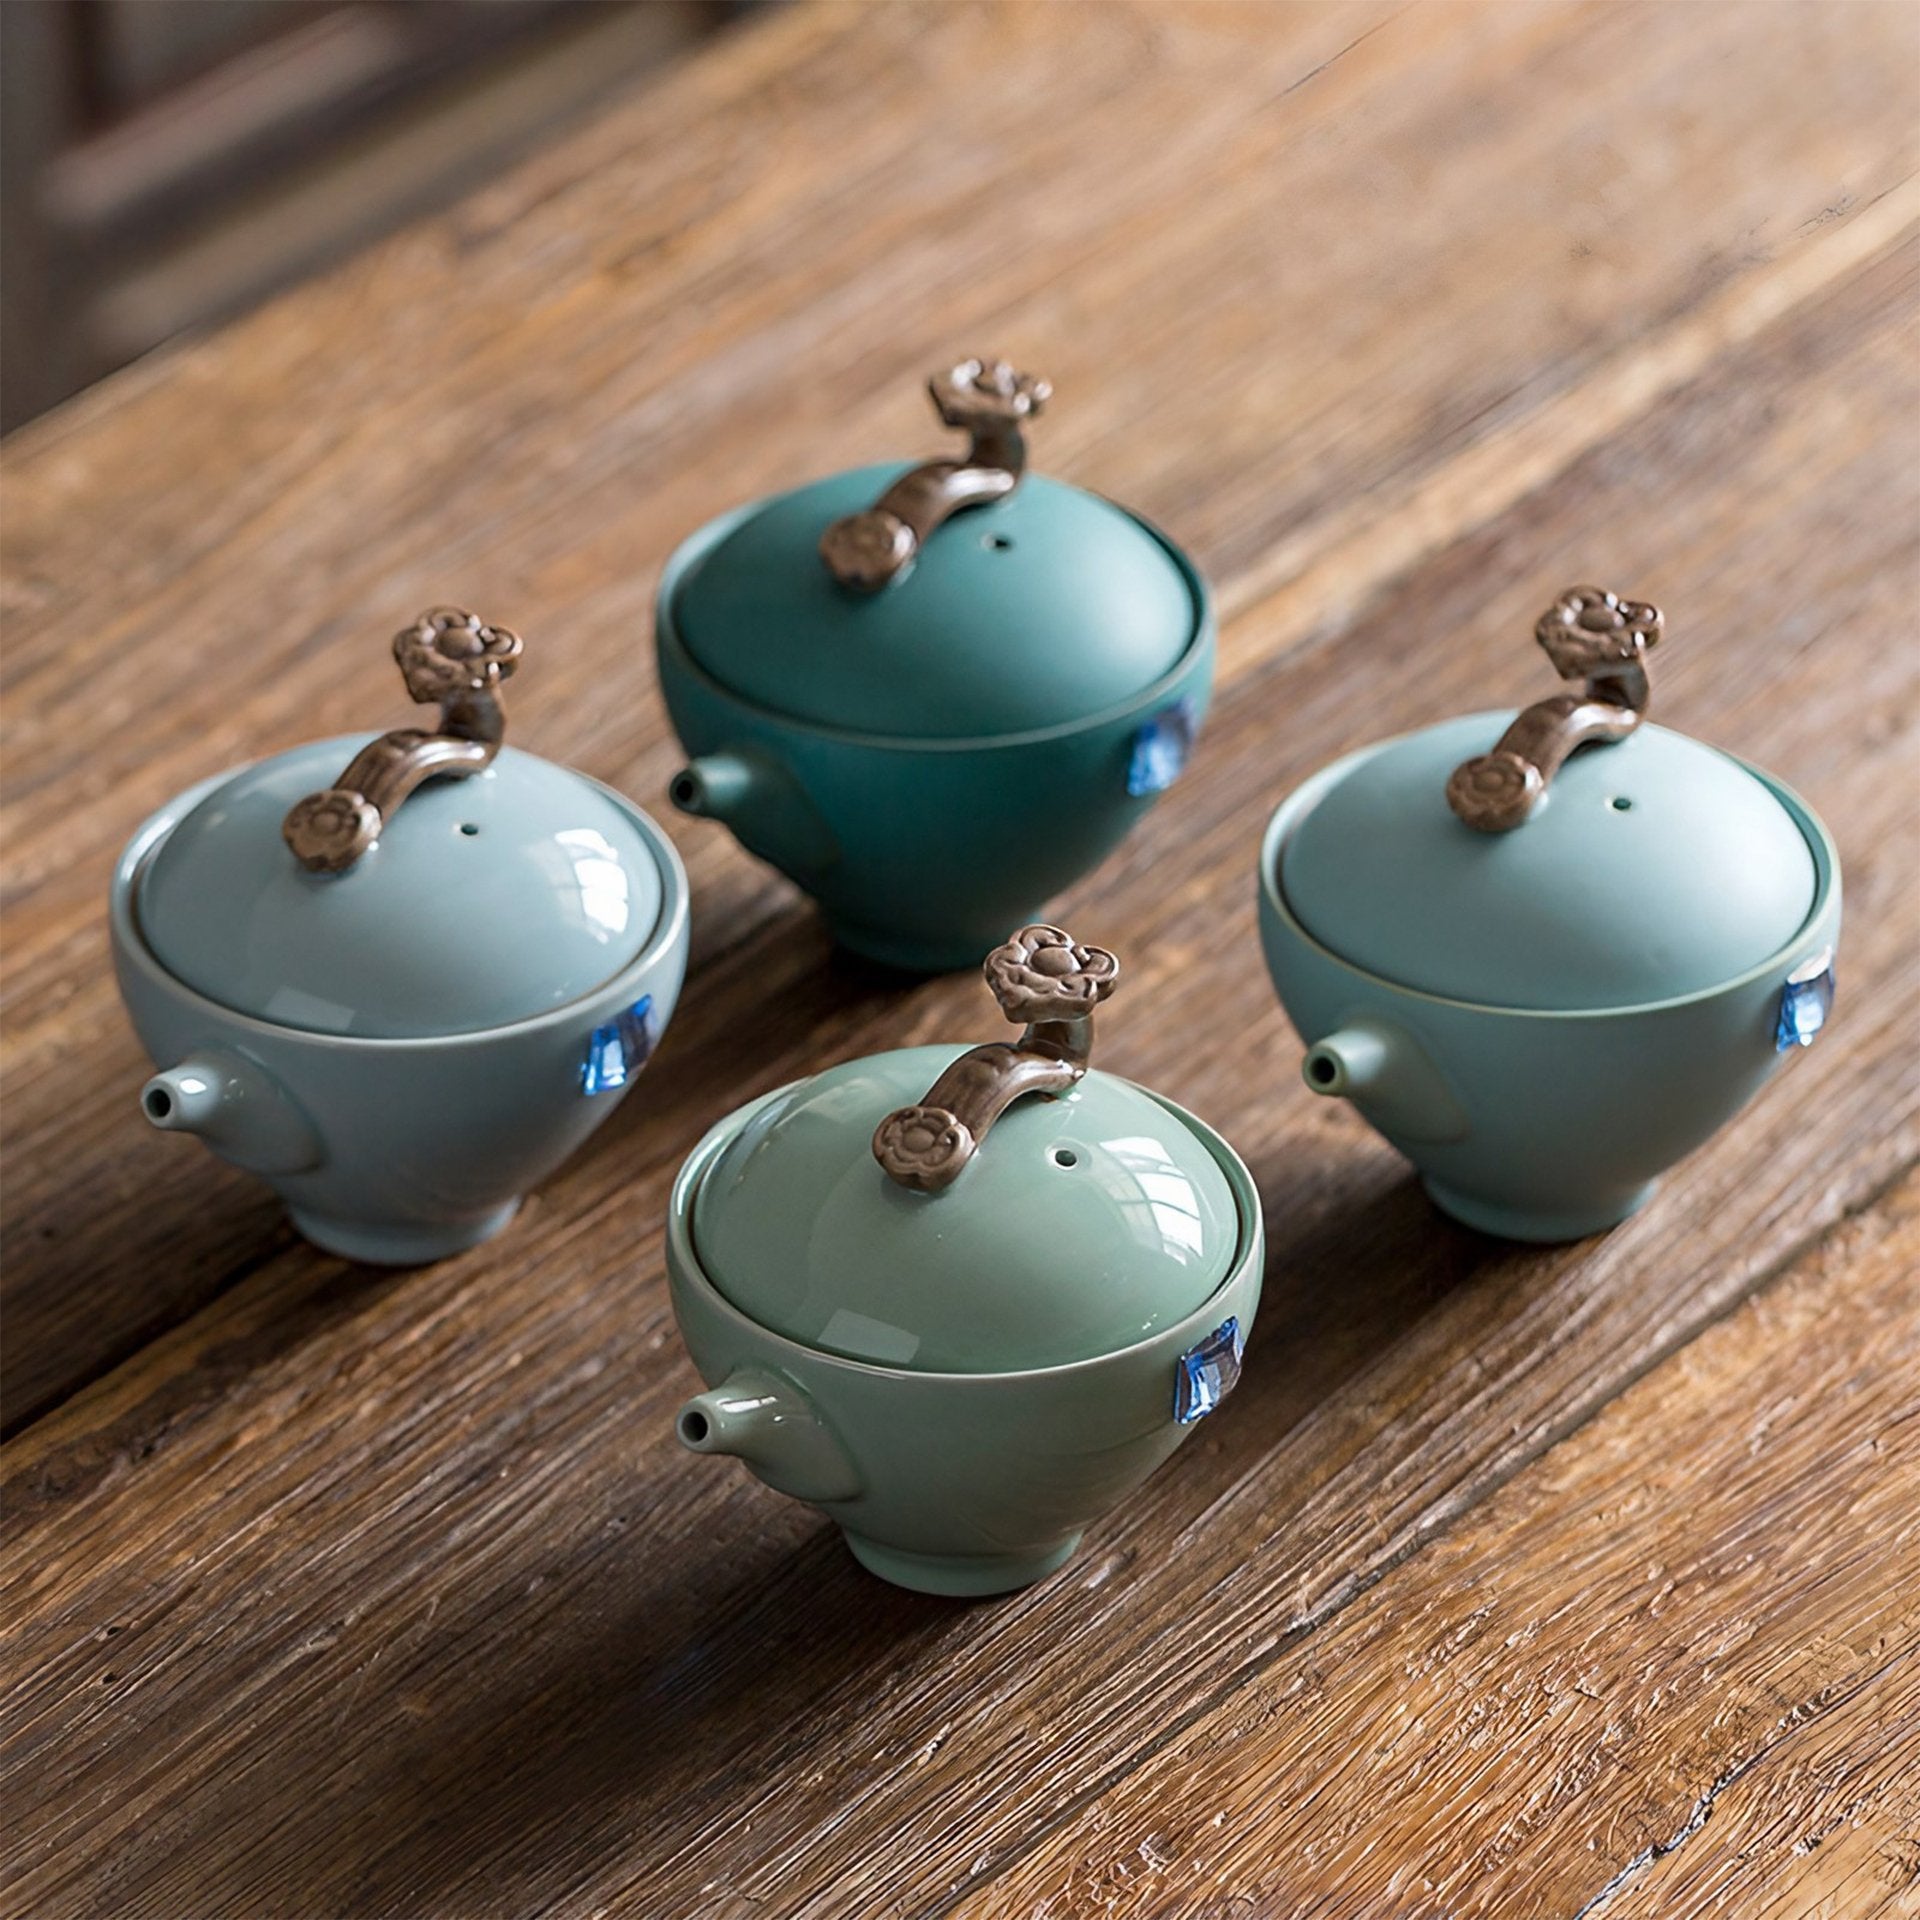 "Yuki" Travel Tea Set - Two Cups + Protective Case